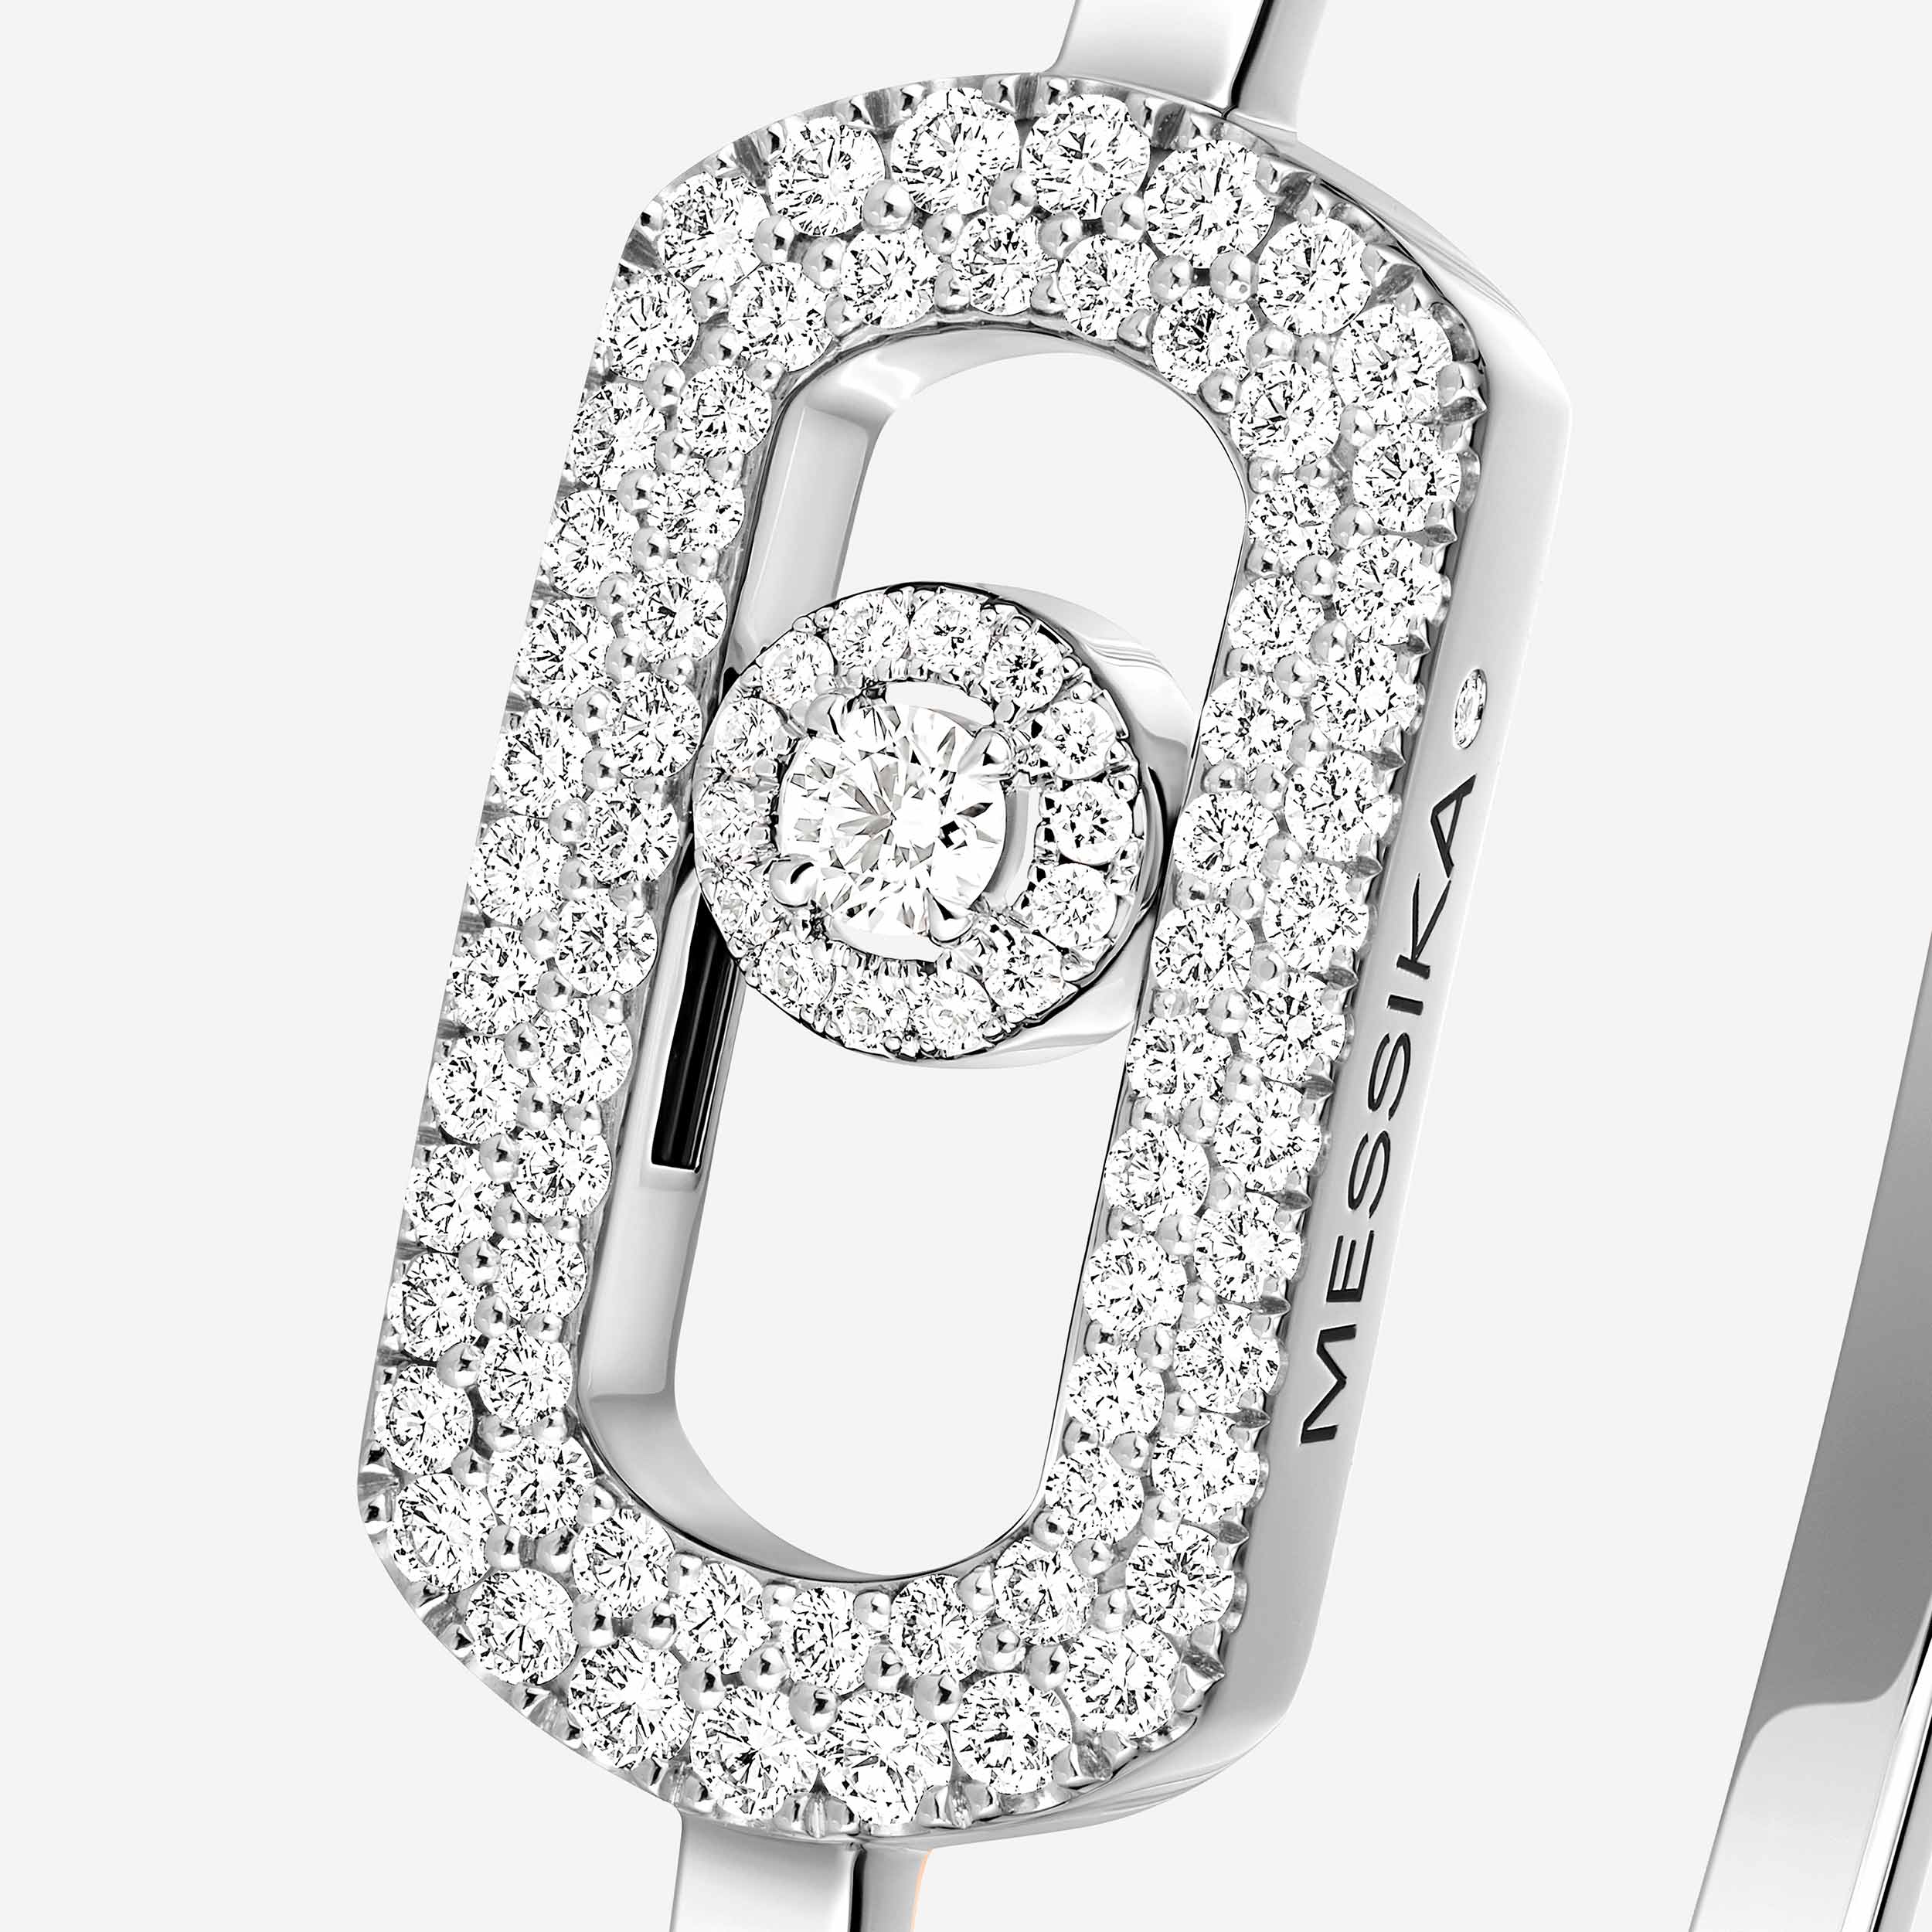 So Move Armreif Mit Diamanten Ausgefasst For Her Diamond Bracelet White Gold 13428-WG